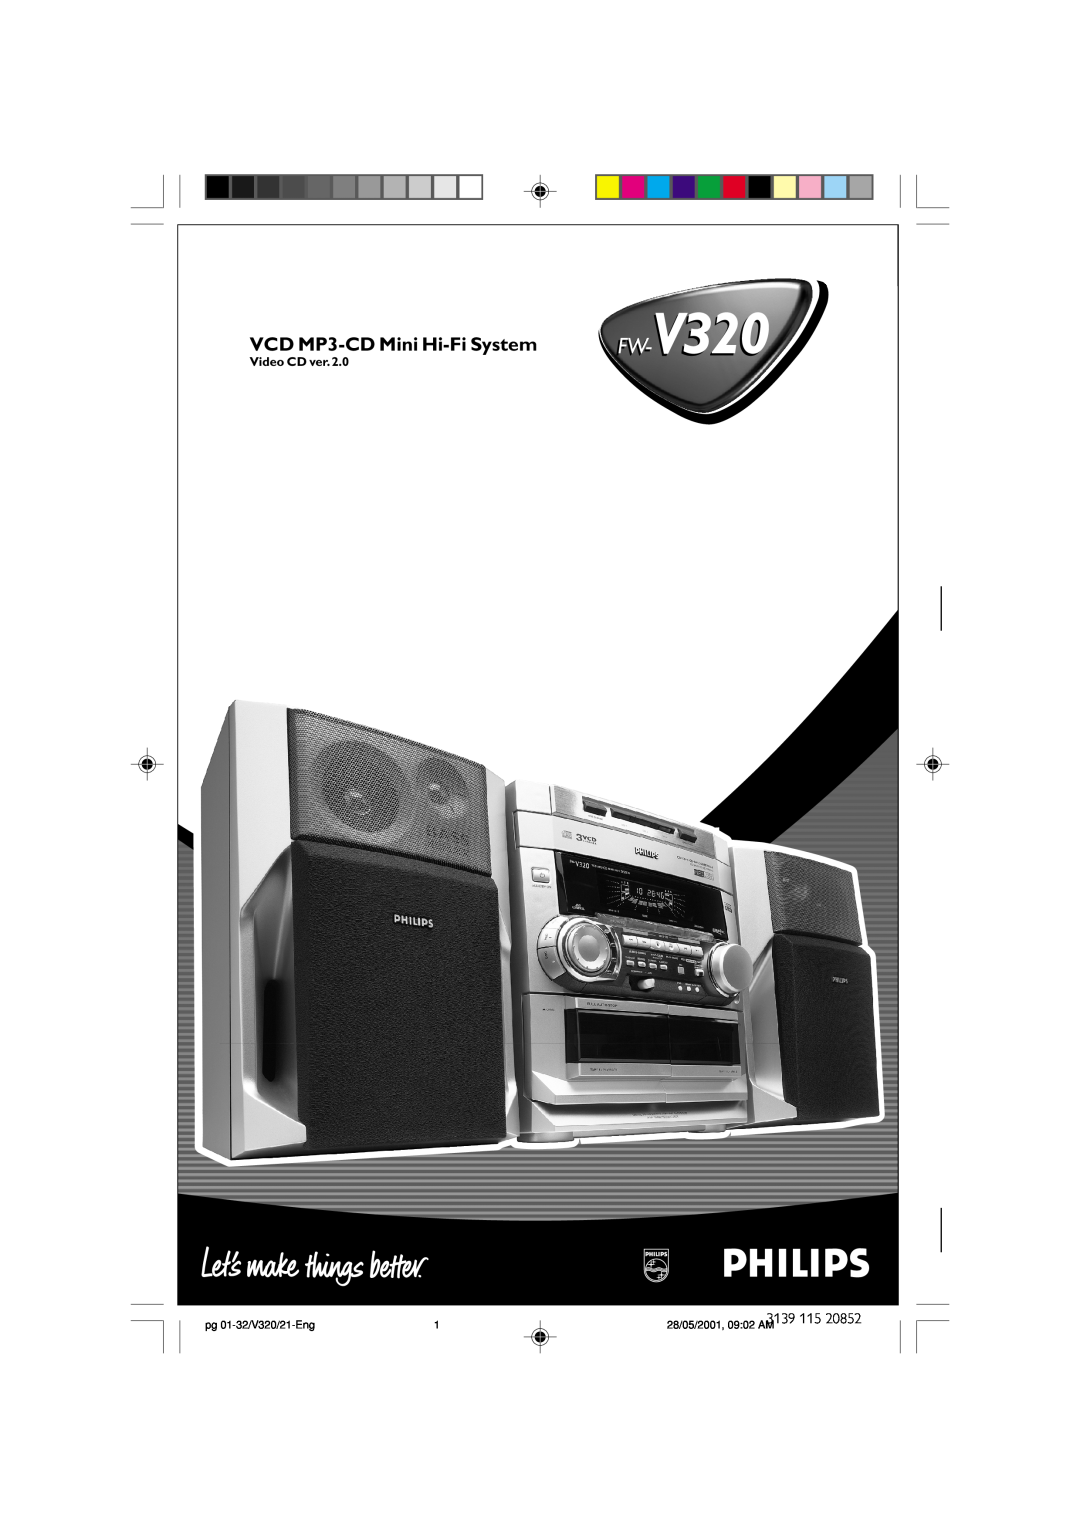 Philips FW-V320/21 manual VCD MP3-CDMini Hi-FiSystem, Video CD ver.2.0, pg 01-32/V320/21-Eng, 28/05/2001, 09 02 AM 